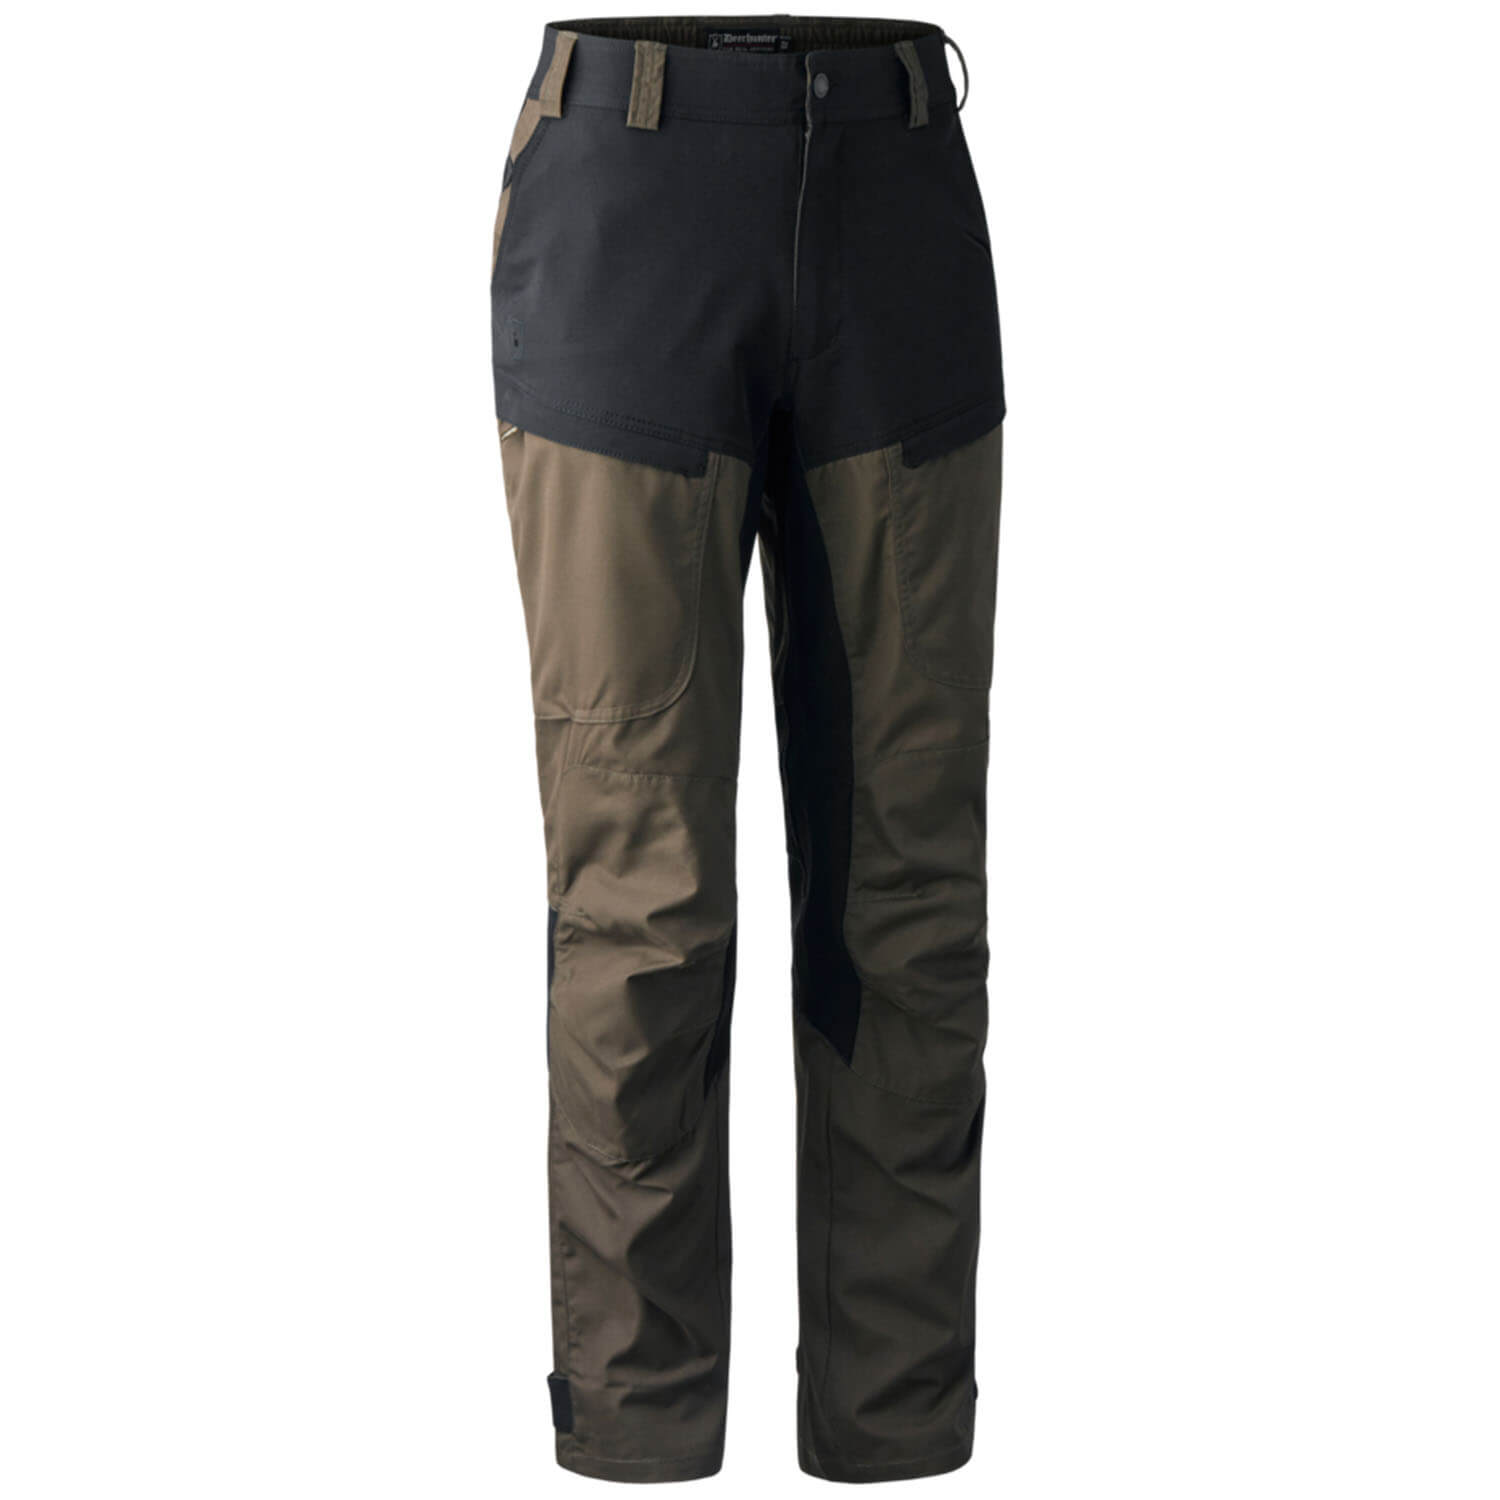 Deerhunter Trousers Strike (Fallen leaf/black) - Hunting Trousers